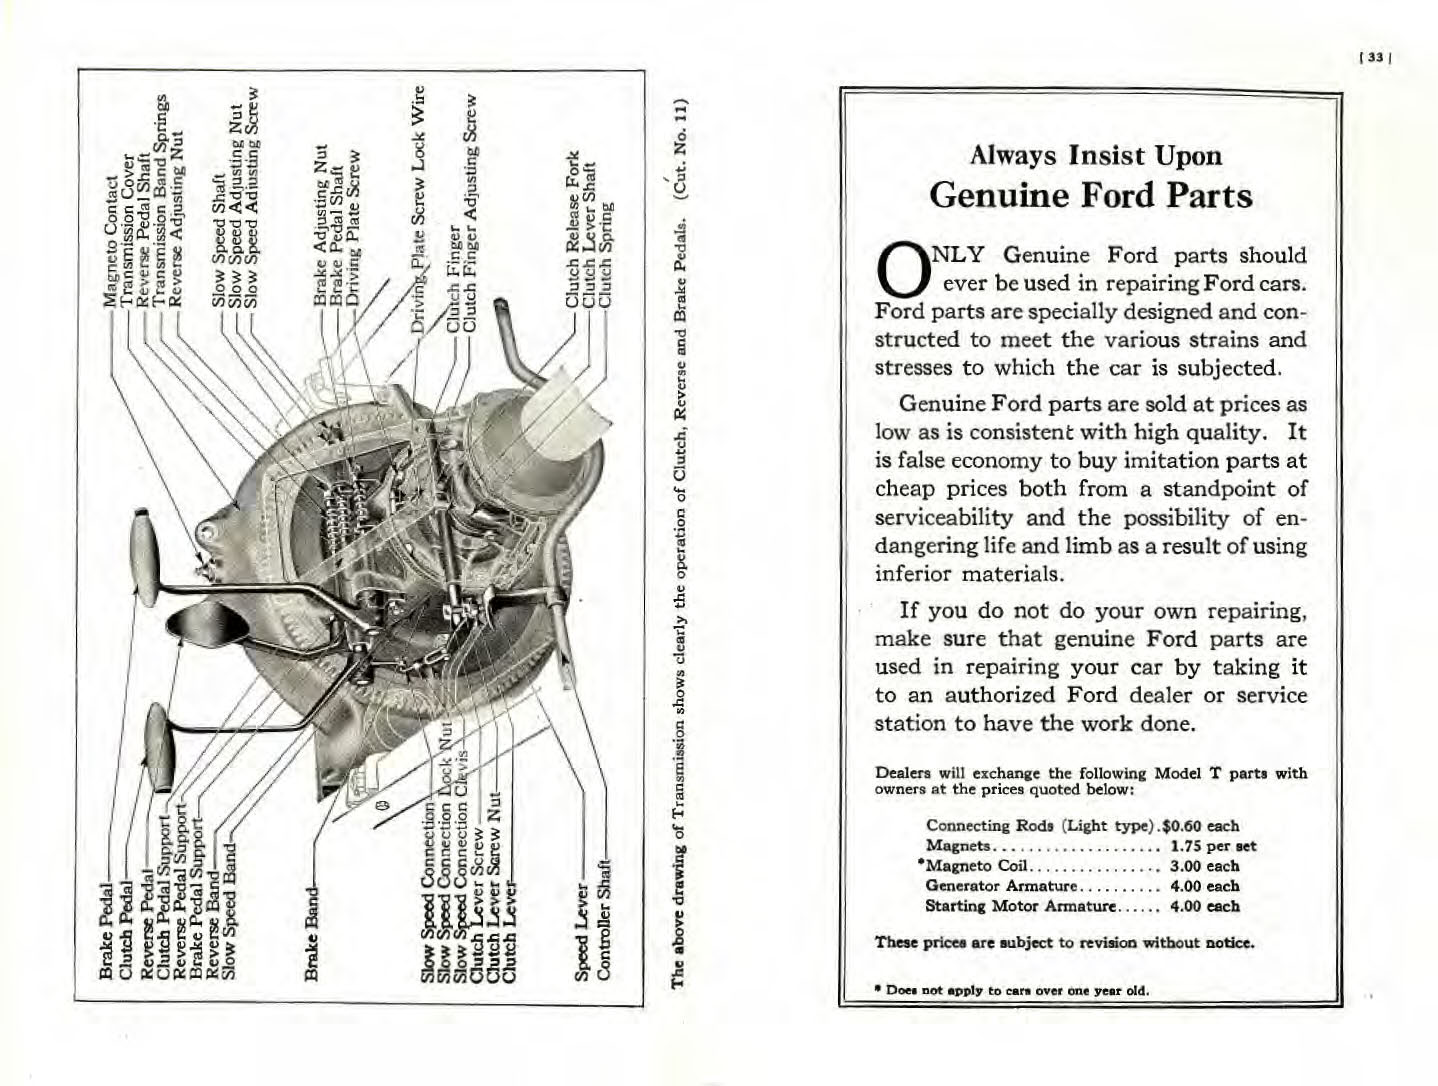 n_1926 Ford Owners Manual-32-33.jpg